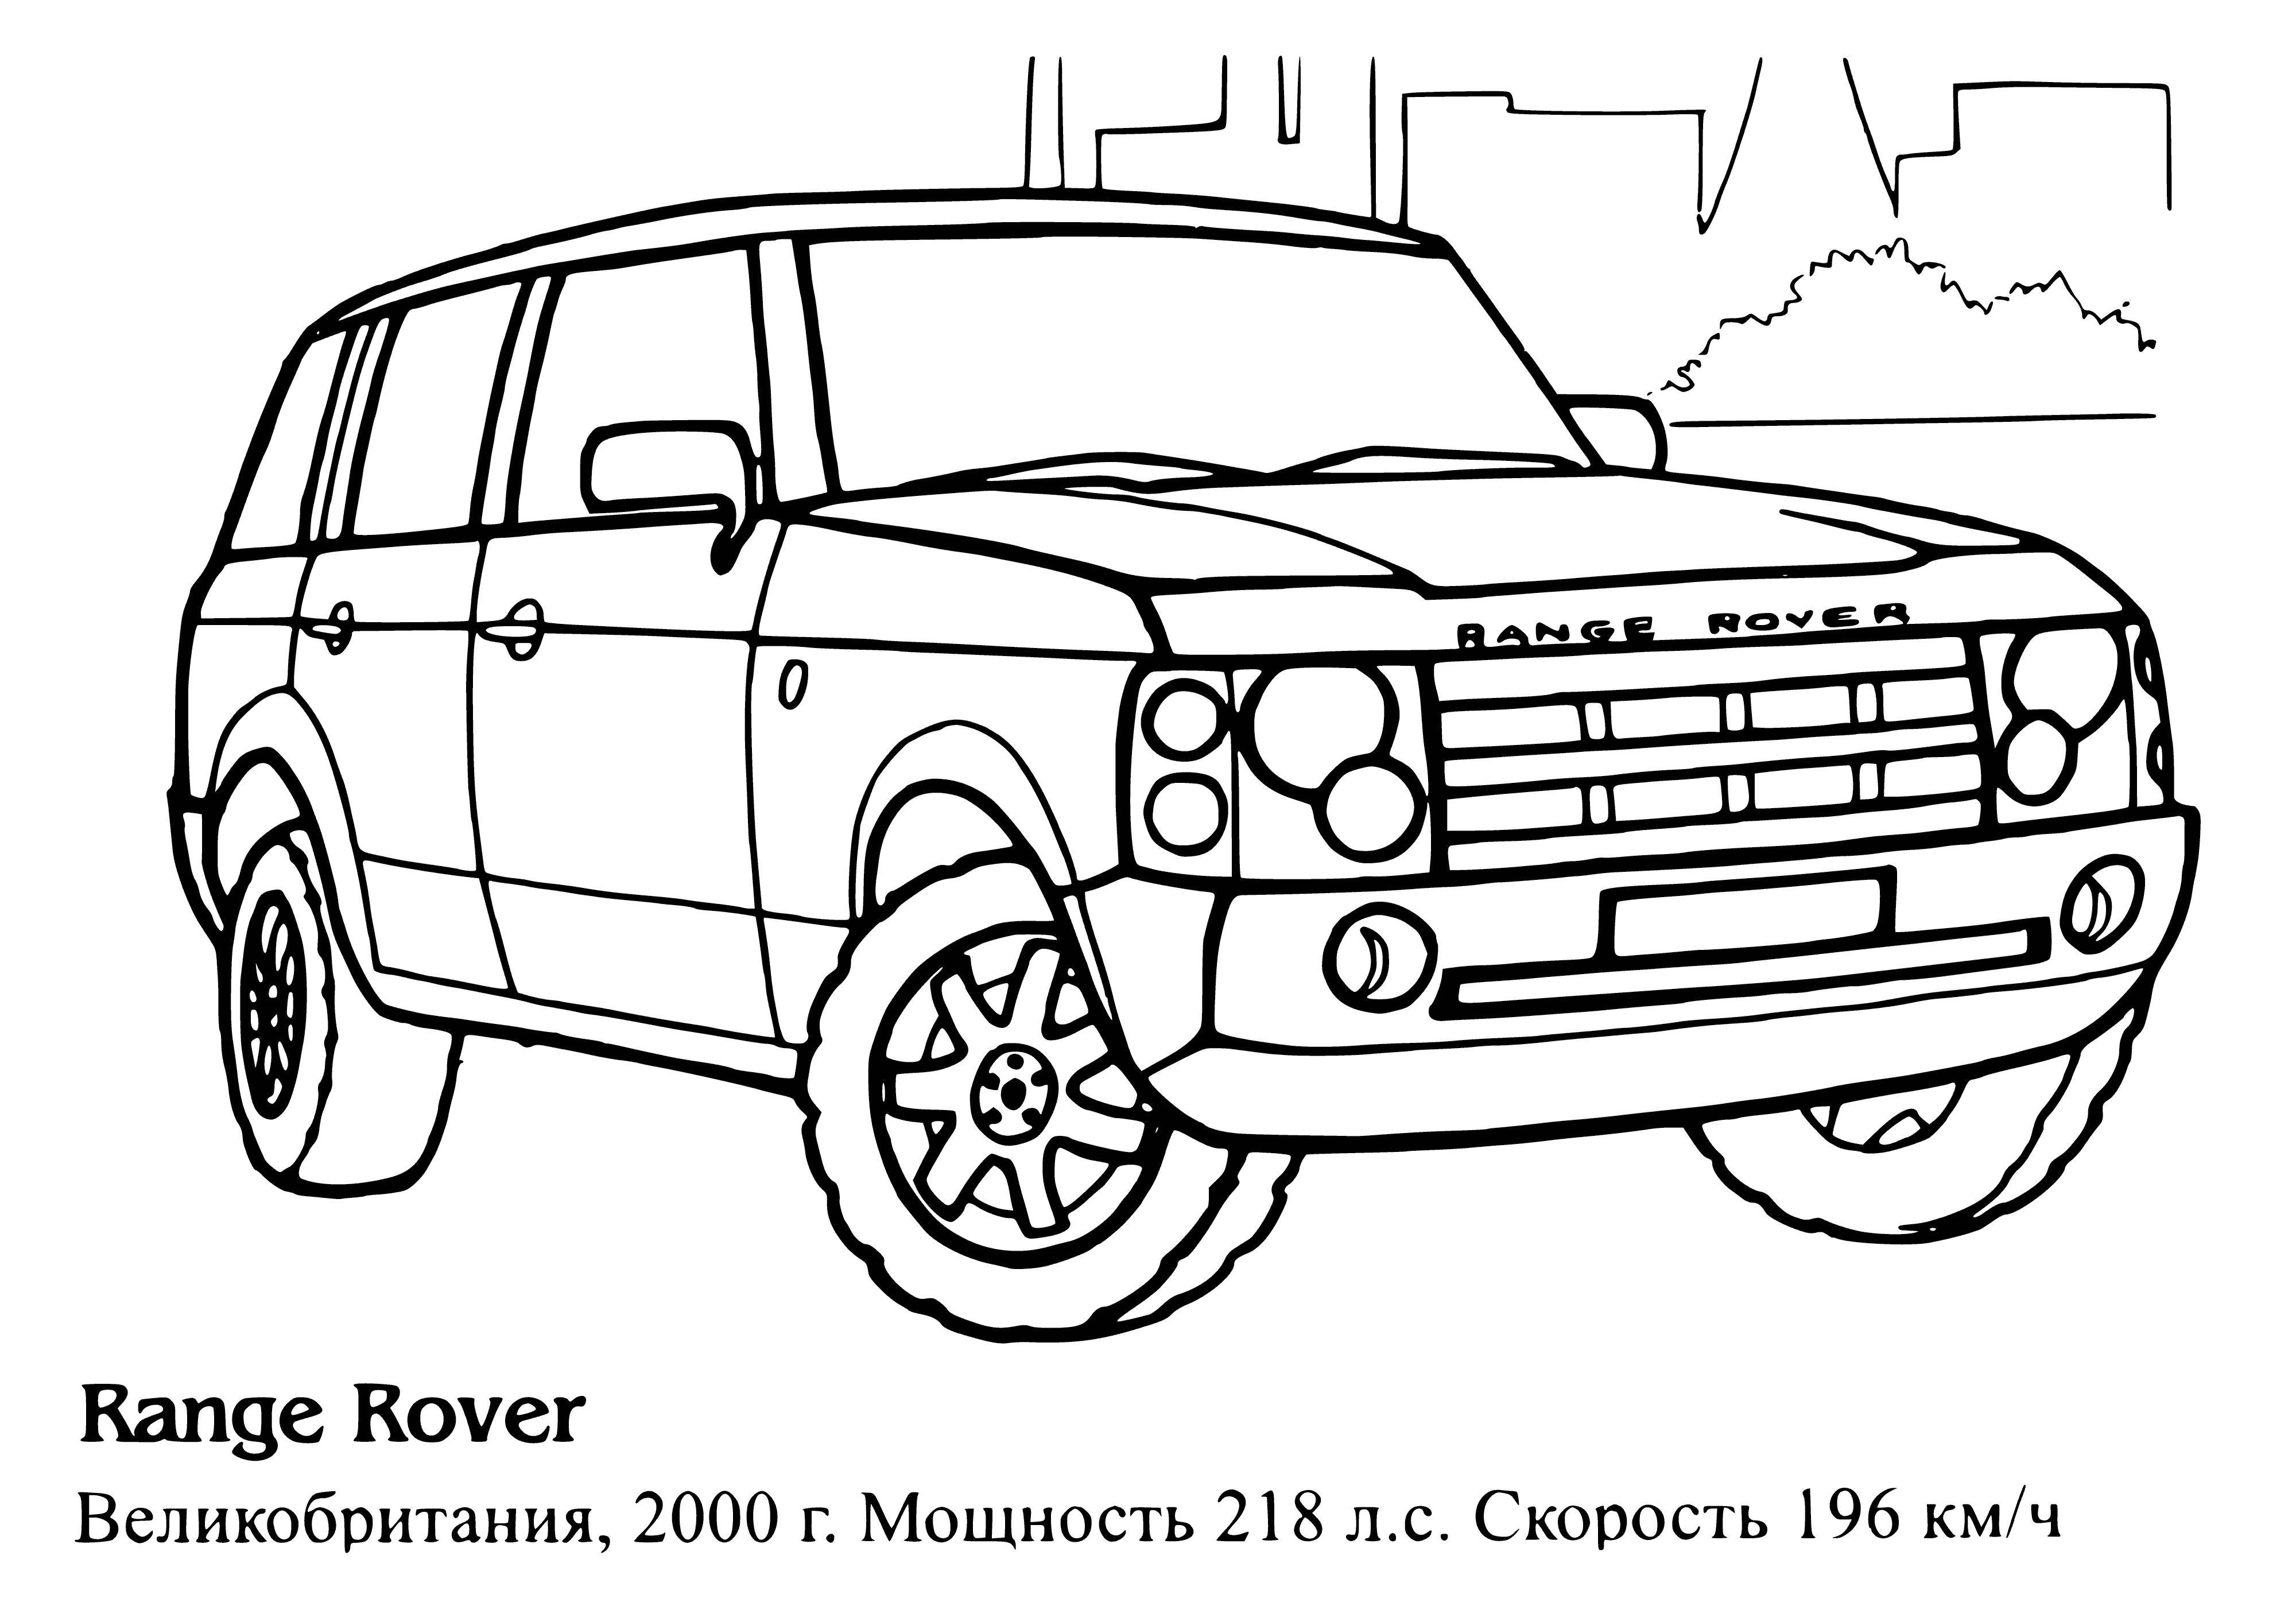 Range Rover kolorowanka